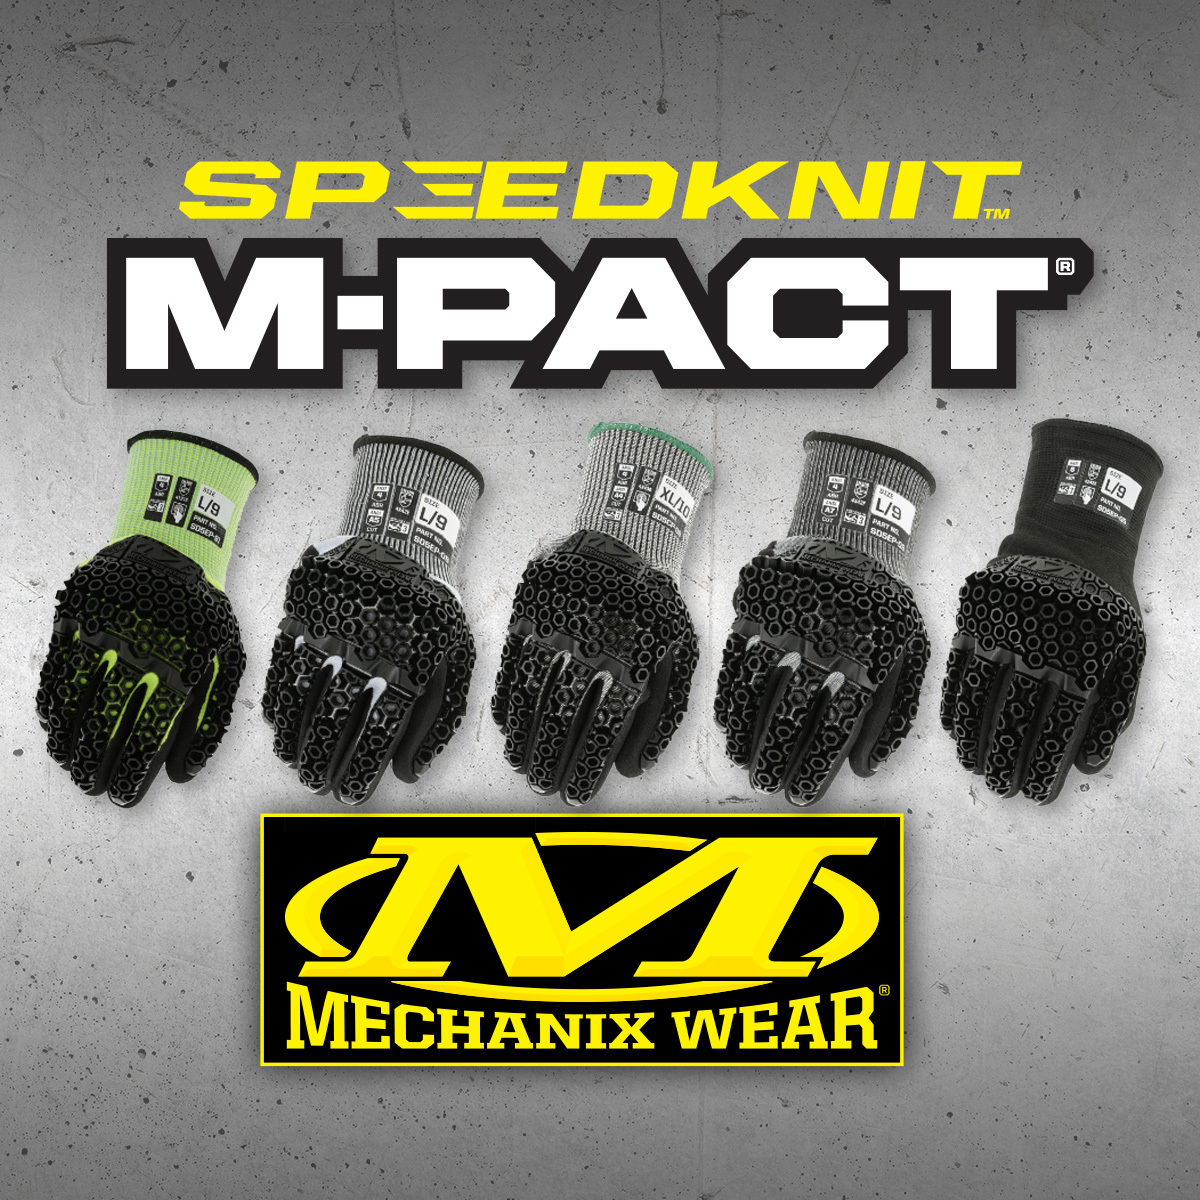 Mechanixwear SpeedKnit M-Pact D30 Gloves (various) 3 for $21 shipped ($7 each pair, each additional pair $5)